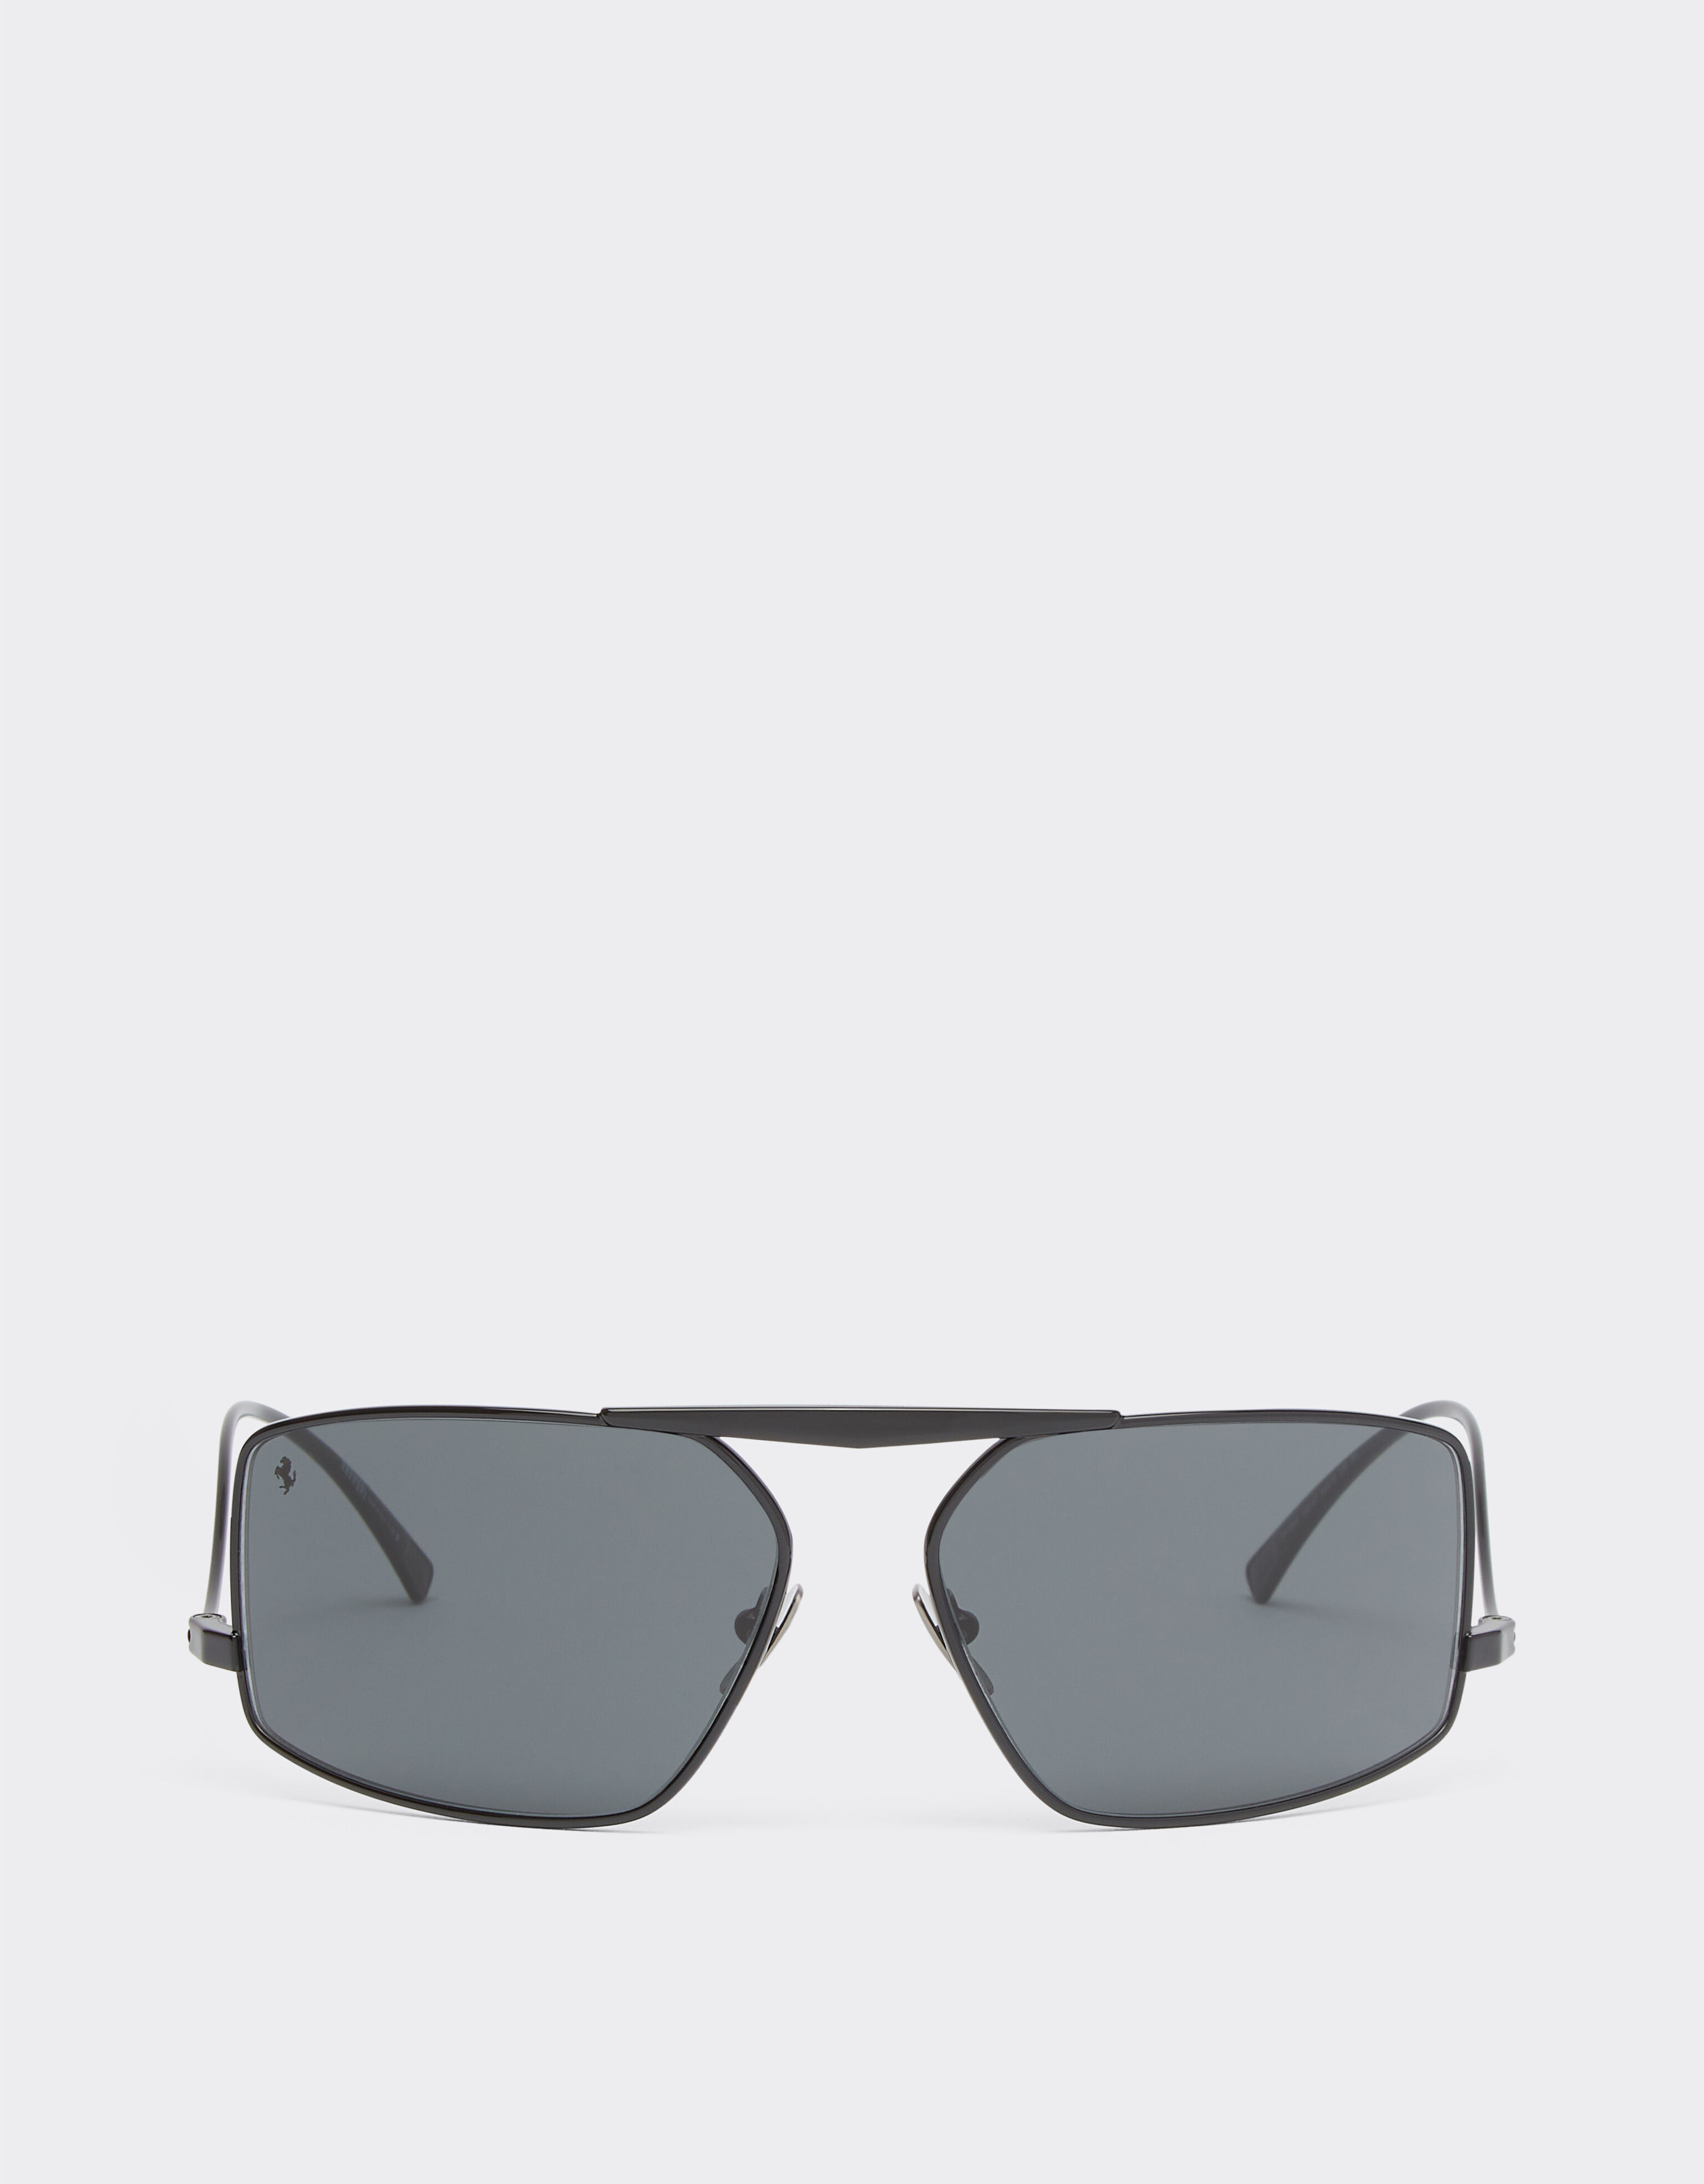 Ferrari Ferrari sunglasses in black metal with grey lenses Black Matt F1250f